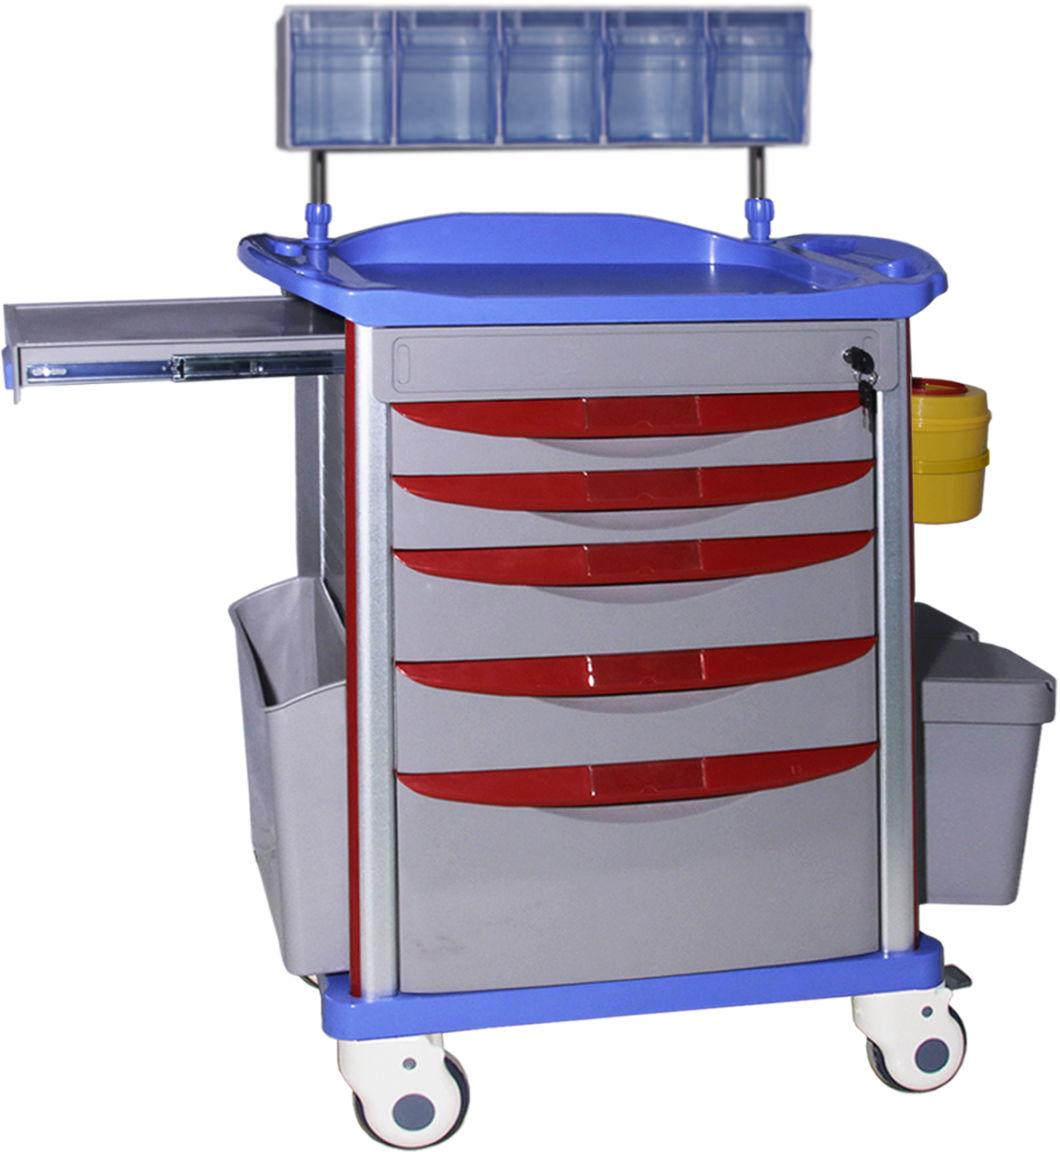 Mn-AC003 Hospital ABS Plastic Treatment Cart Medical Furniture Emergency Trolley